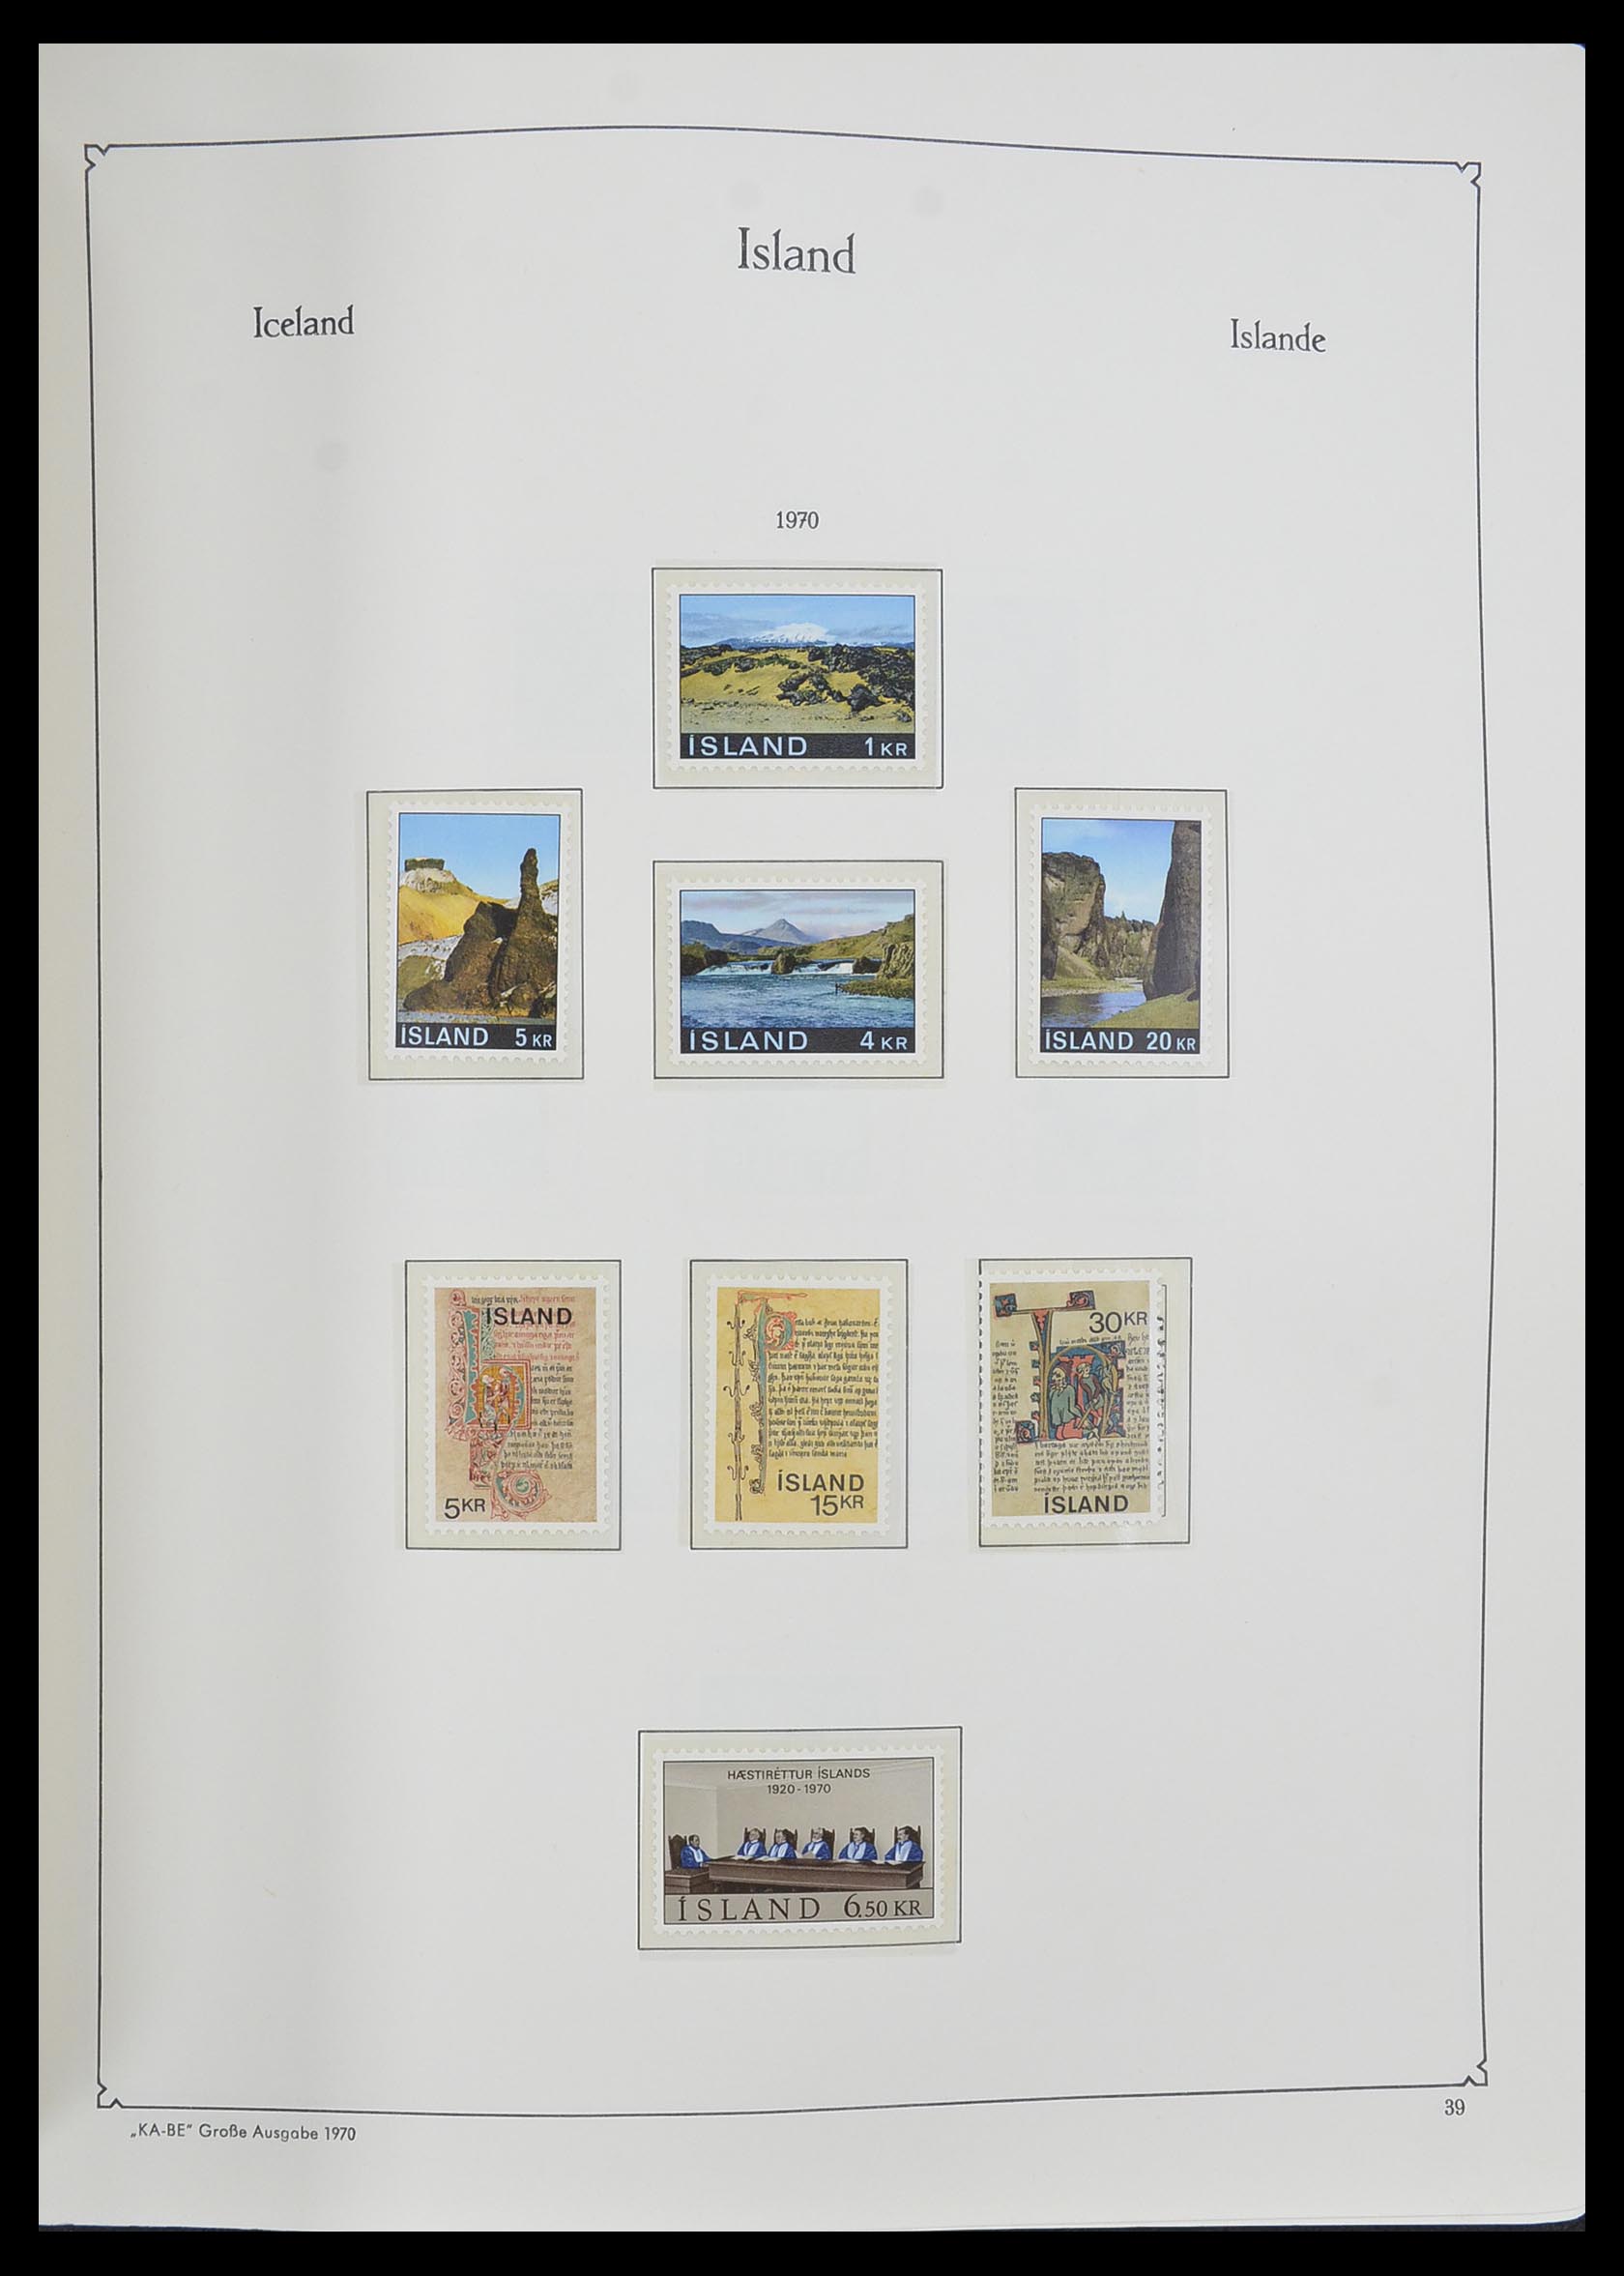 33379 095 - Stamp collection 33379 Scandinavia 1856-1972.